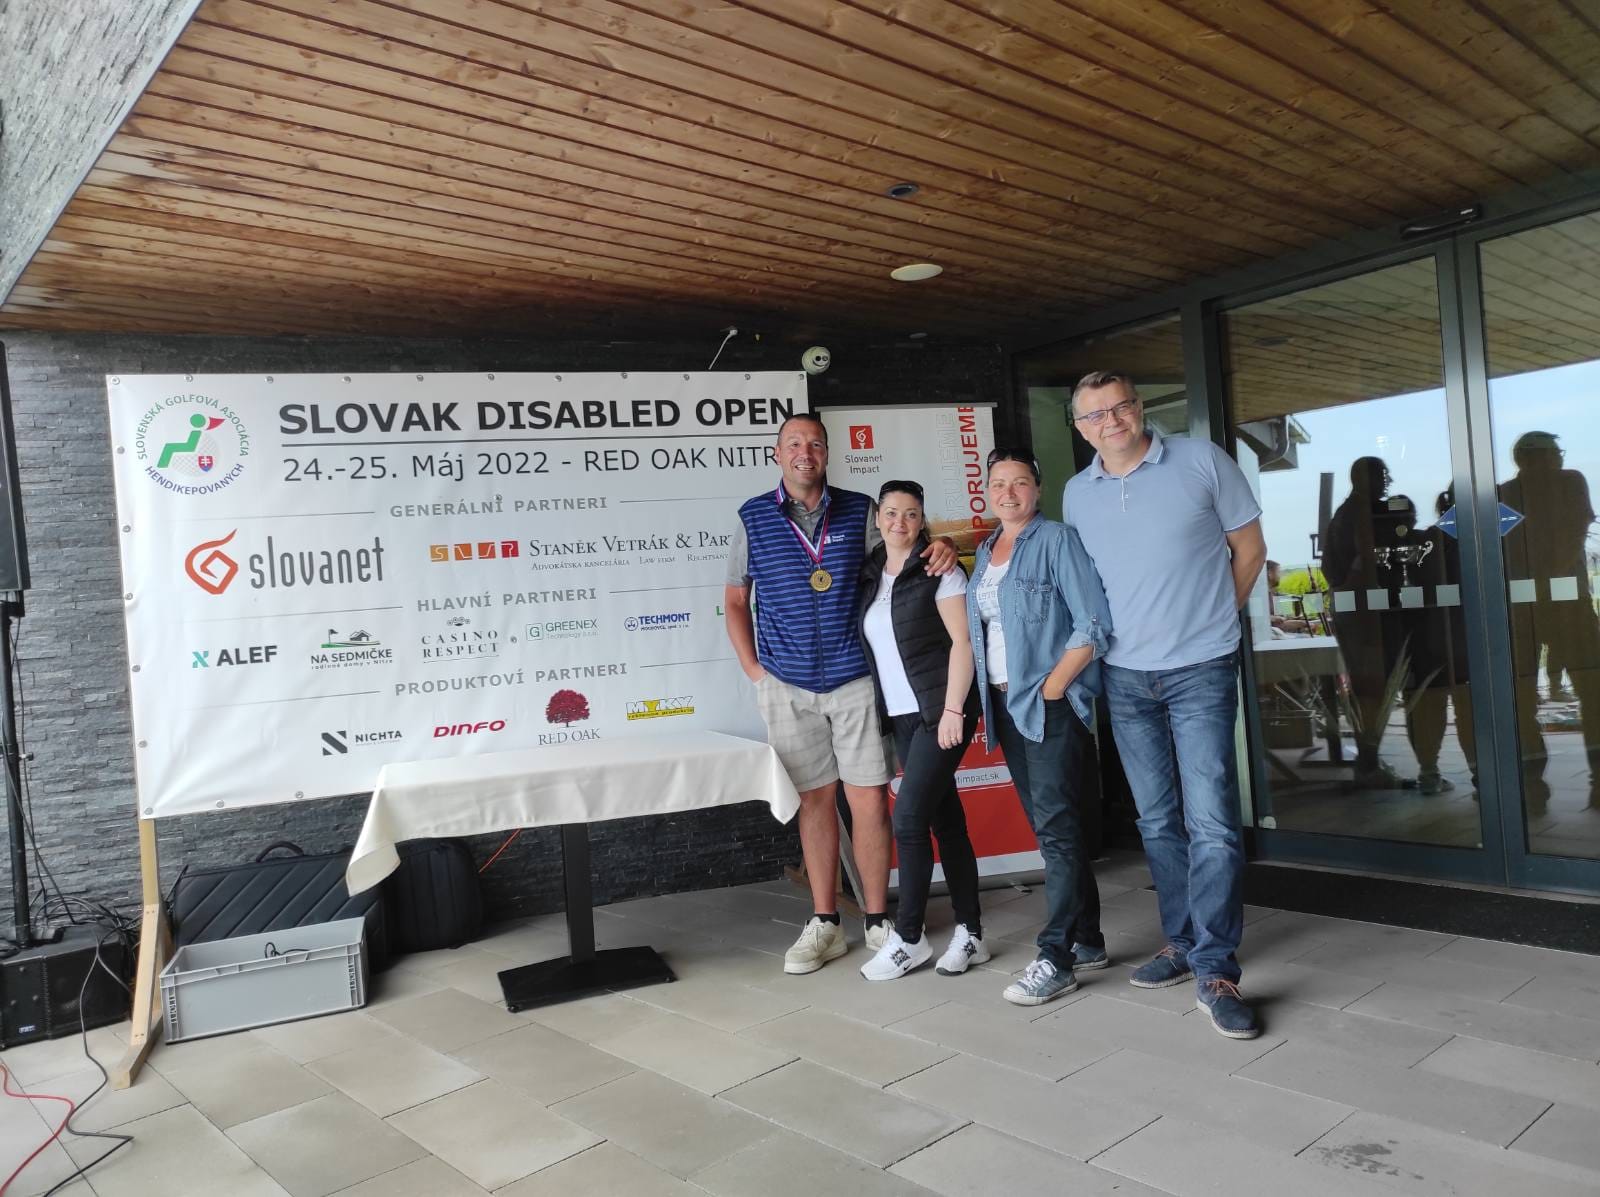 Slovak Disabled Open 2022 - I3